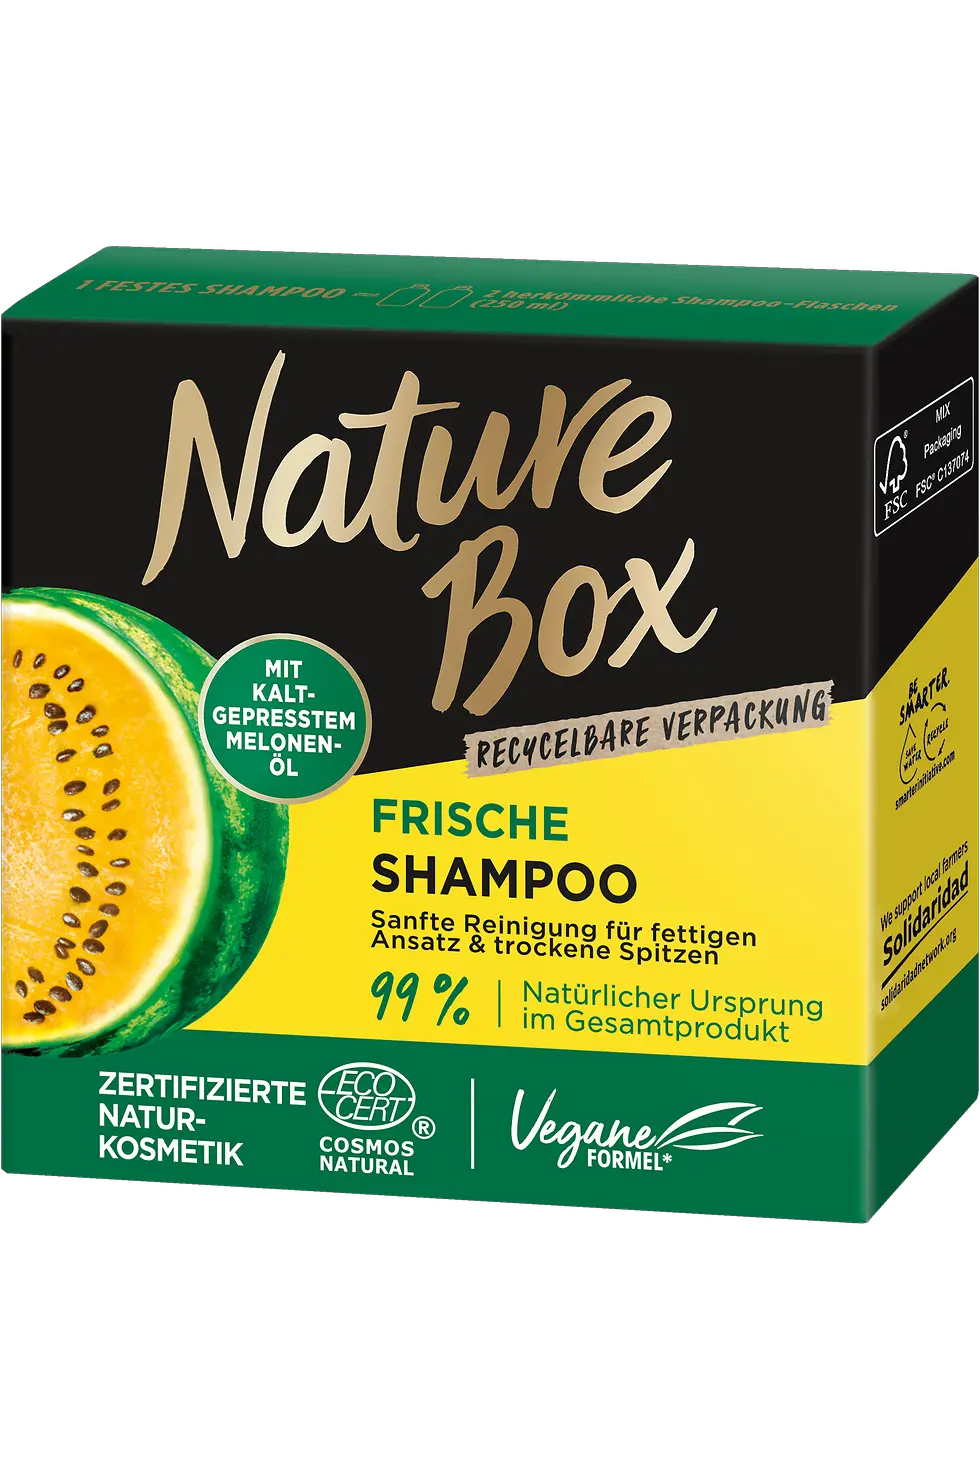 
Nature Box Frische Shampoo